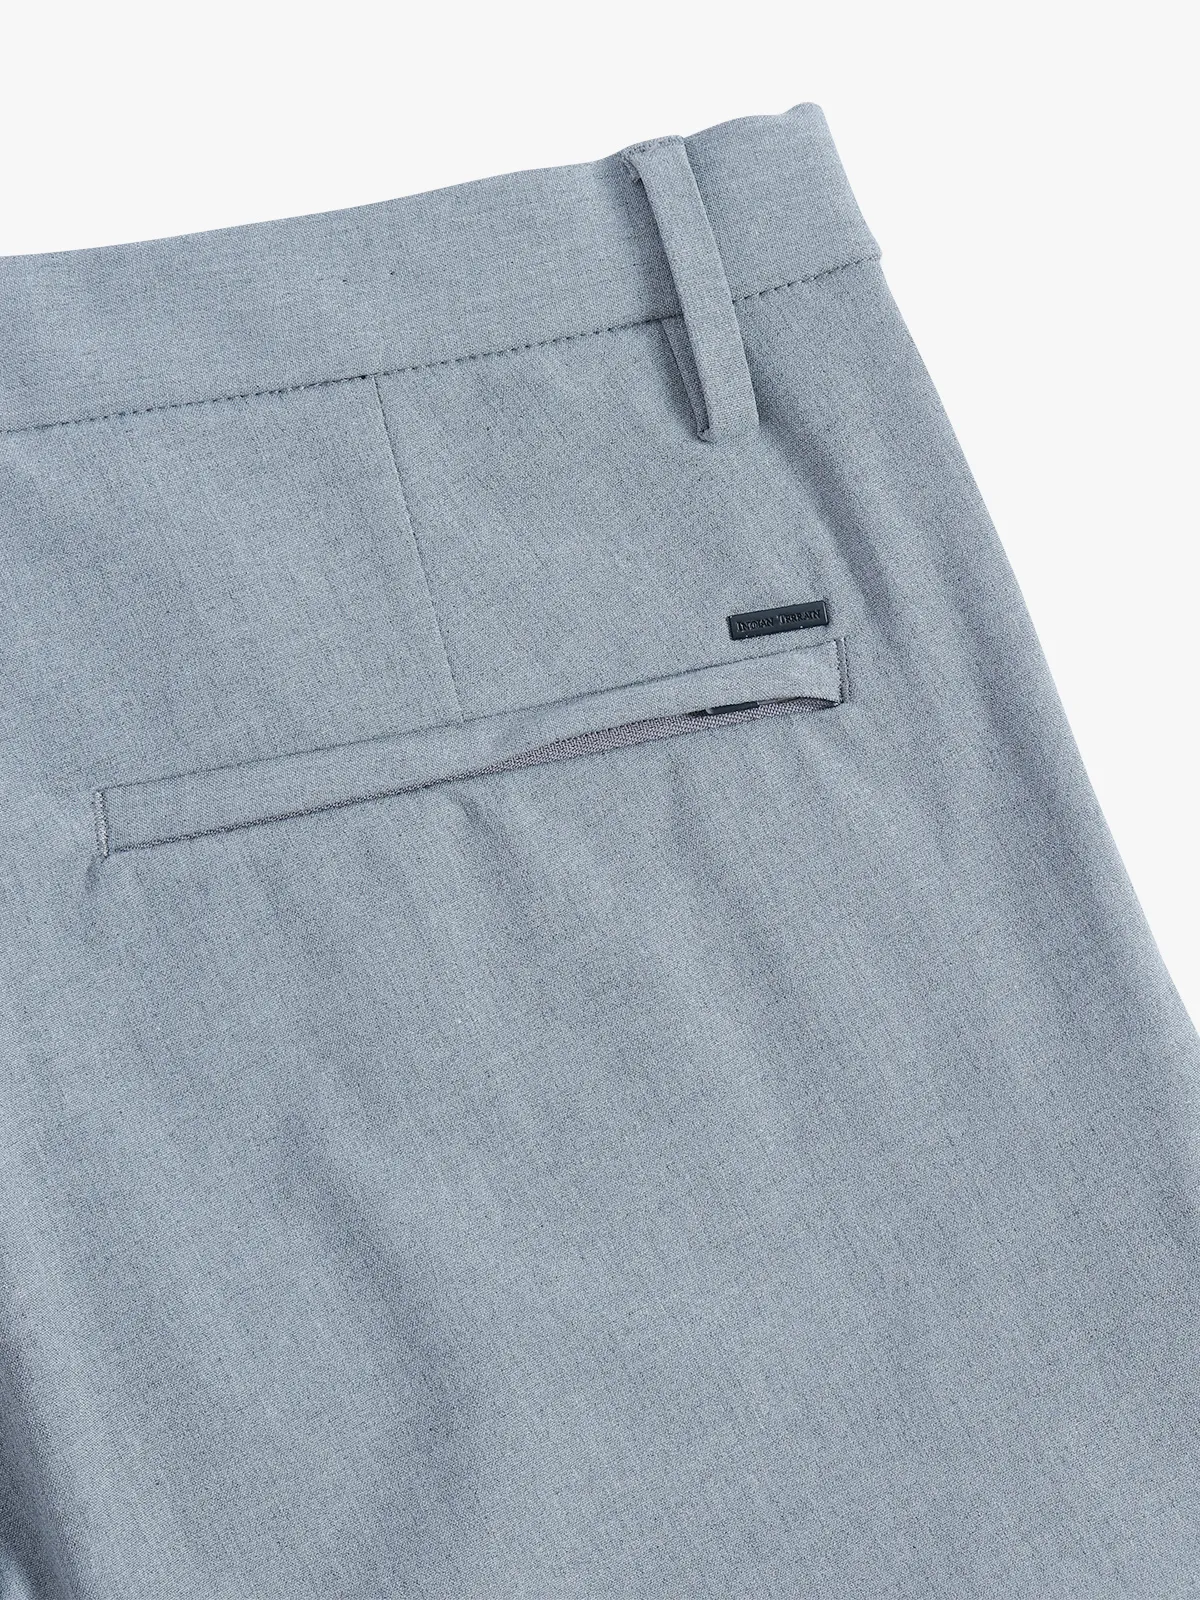 Indian Terrain grey urban fit cotton trouser